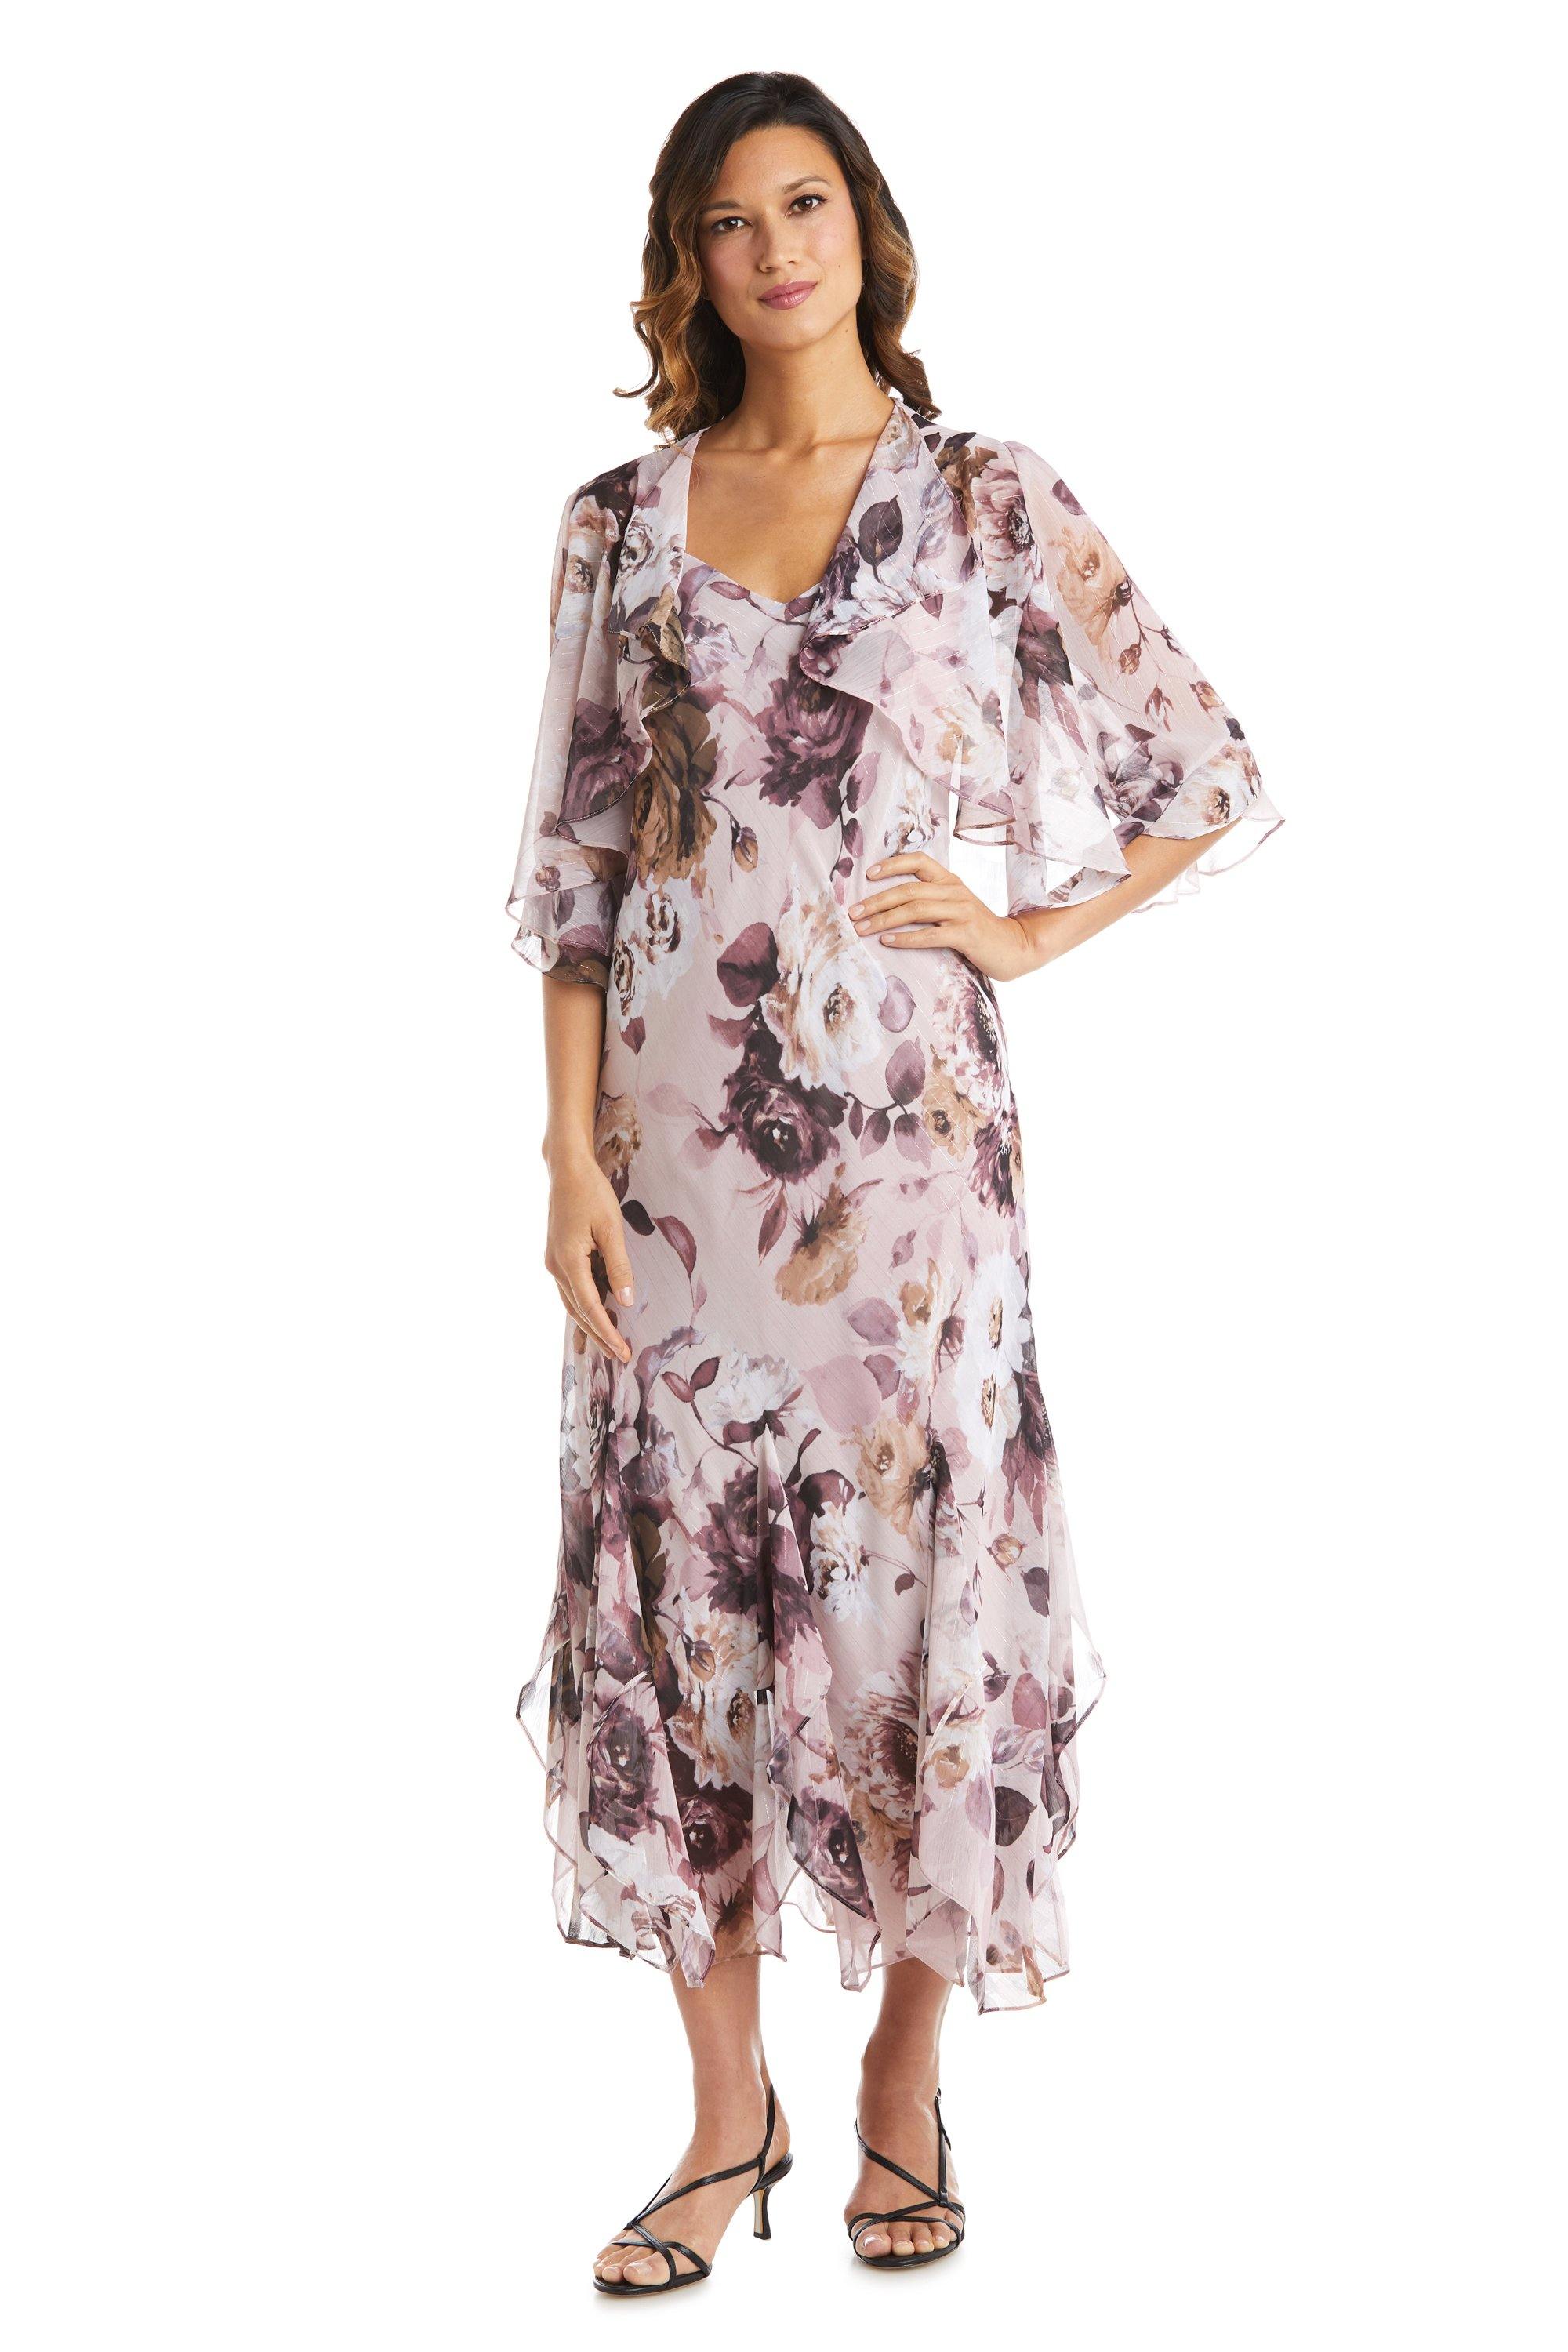 Long Two Piece Floral Jacket Dress Sale - The Dress Outlet